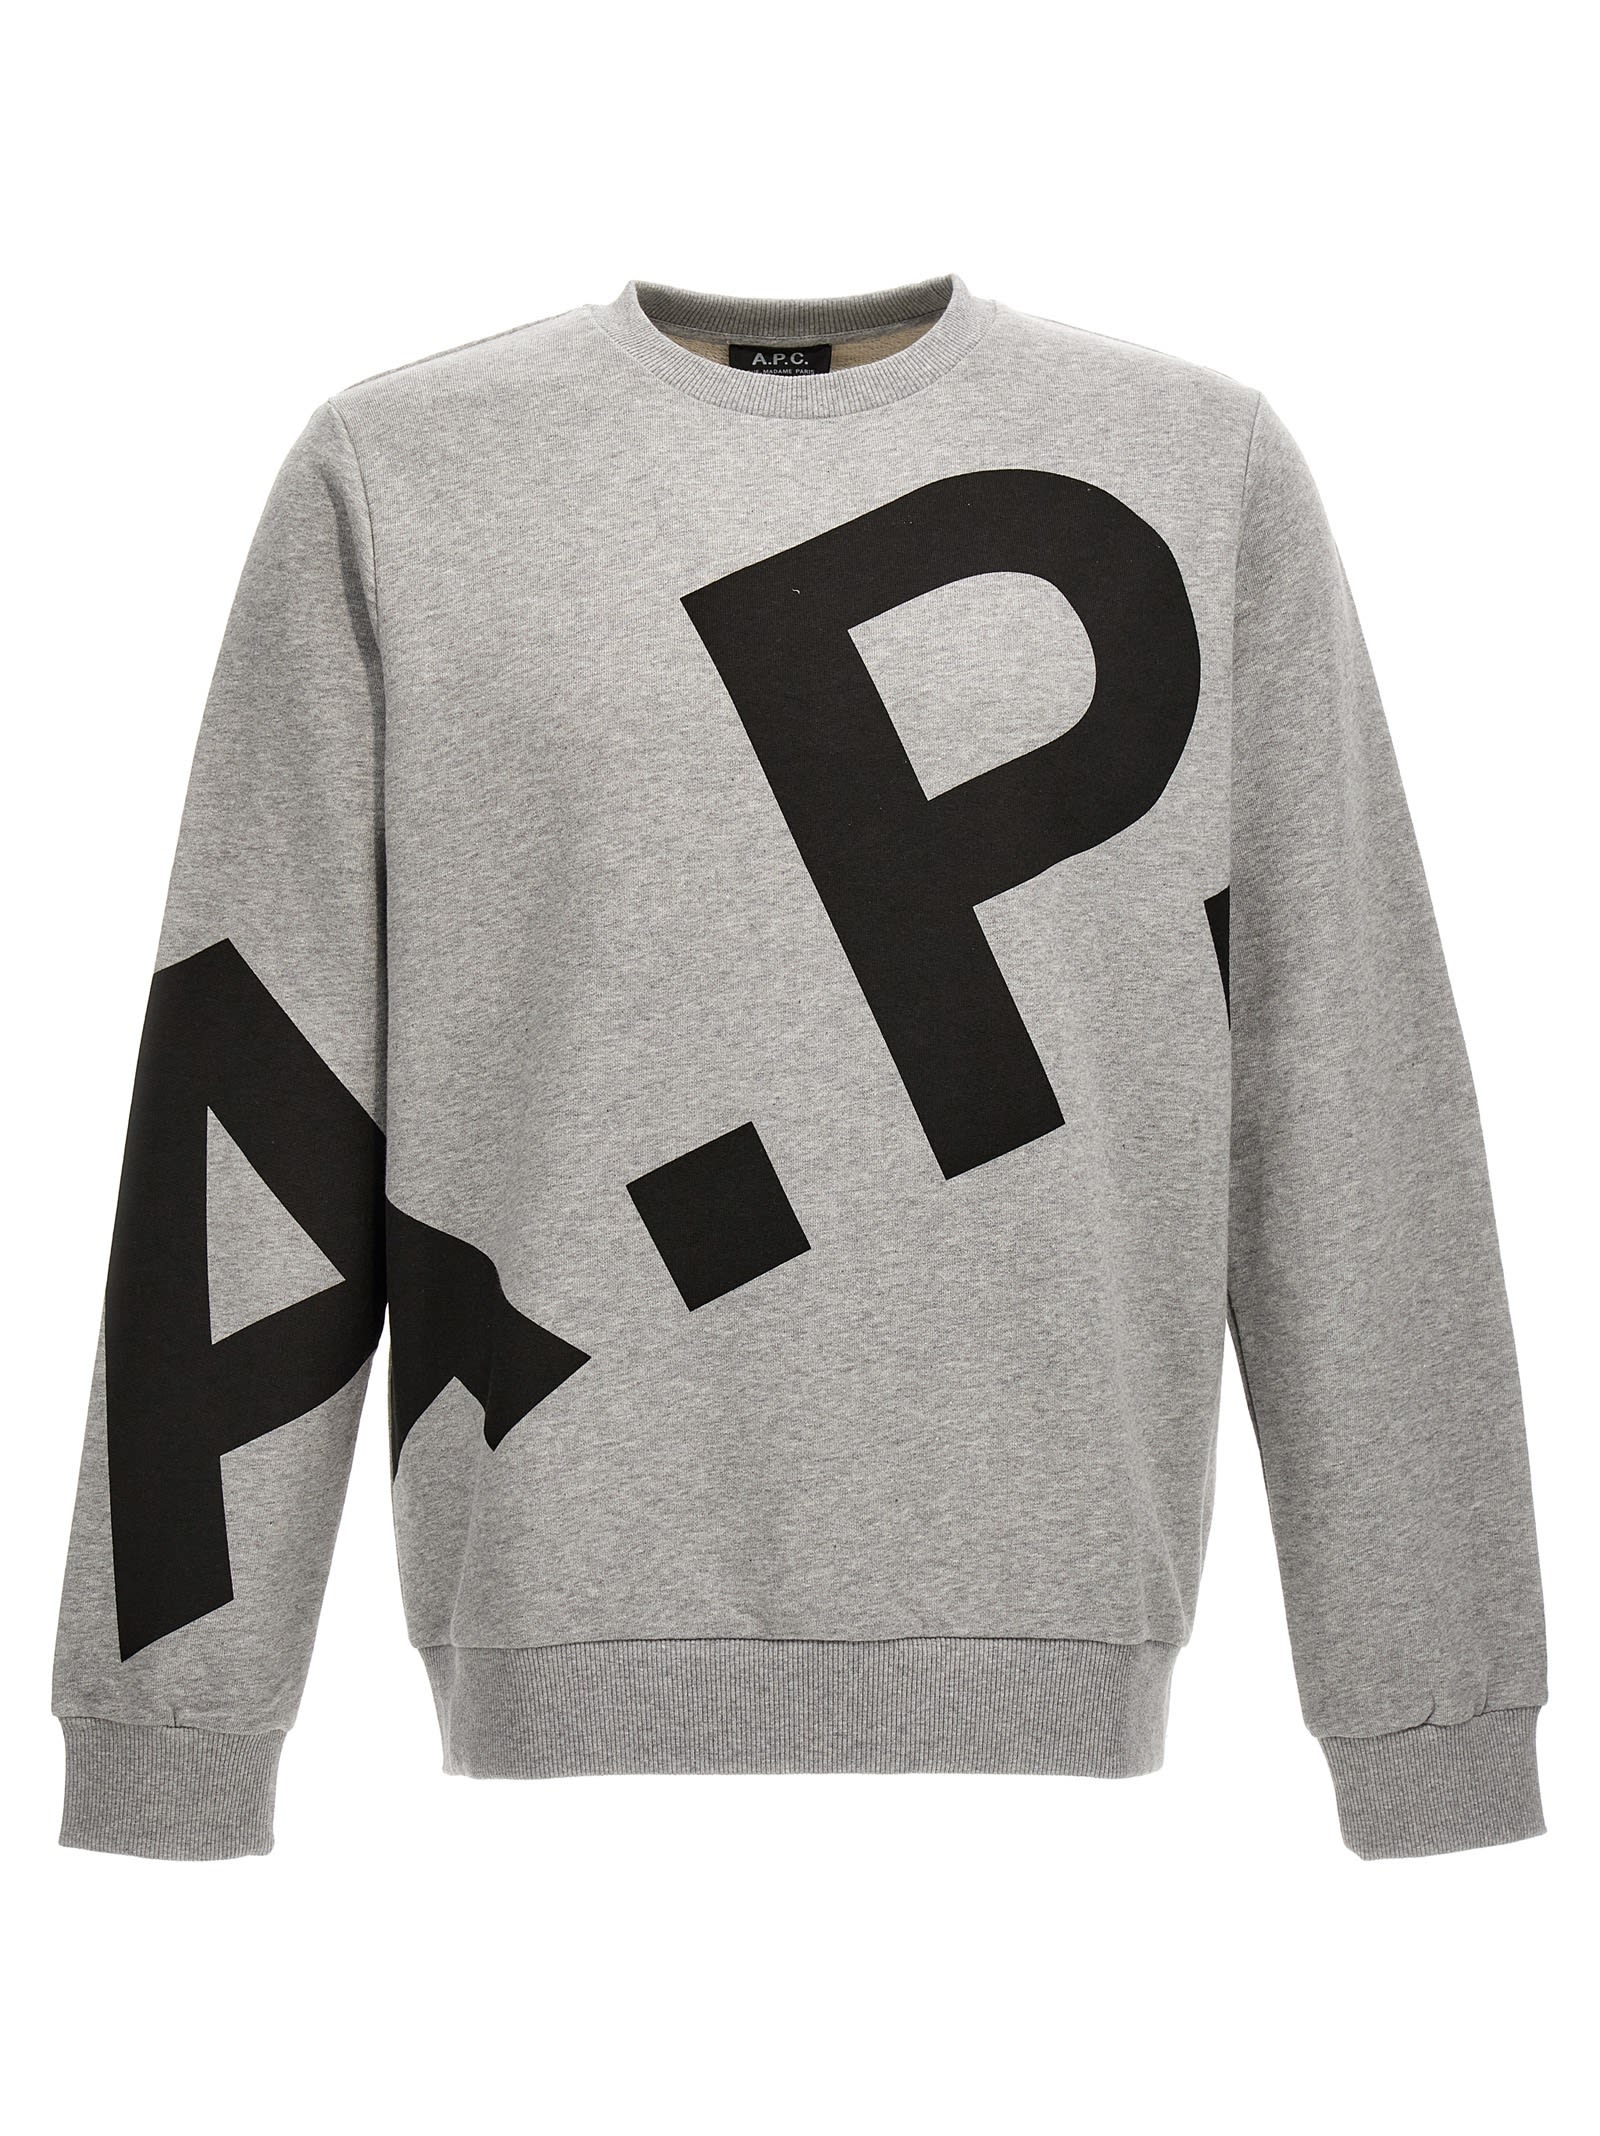 Apc Cory Sweatshirt In Grey